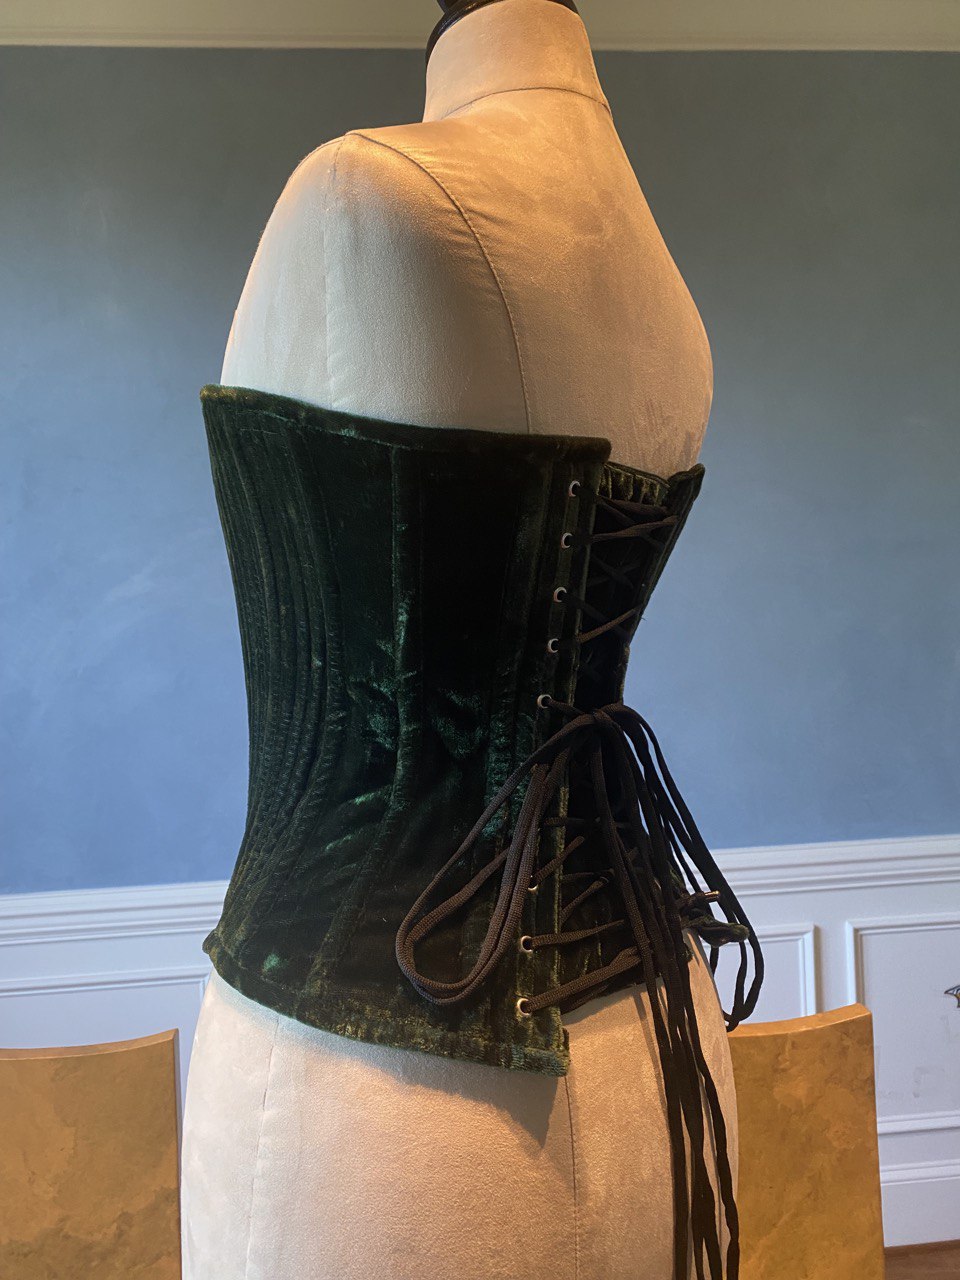 FREE CORSET PATTERN - Fully boned long-back corset